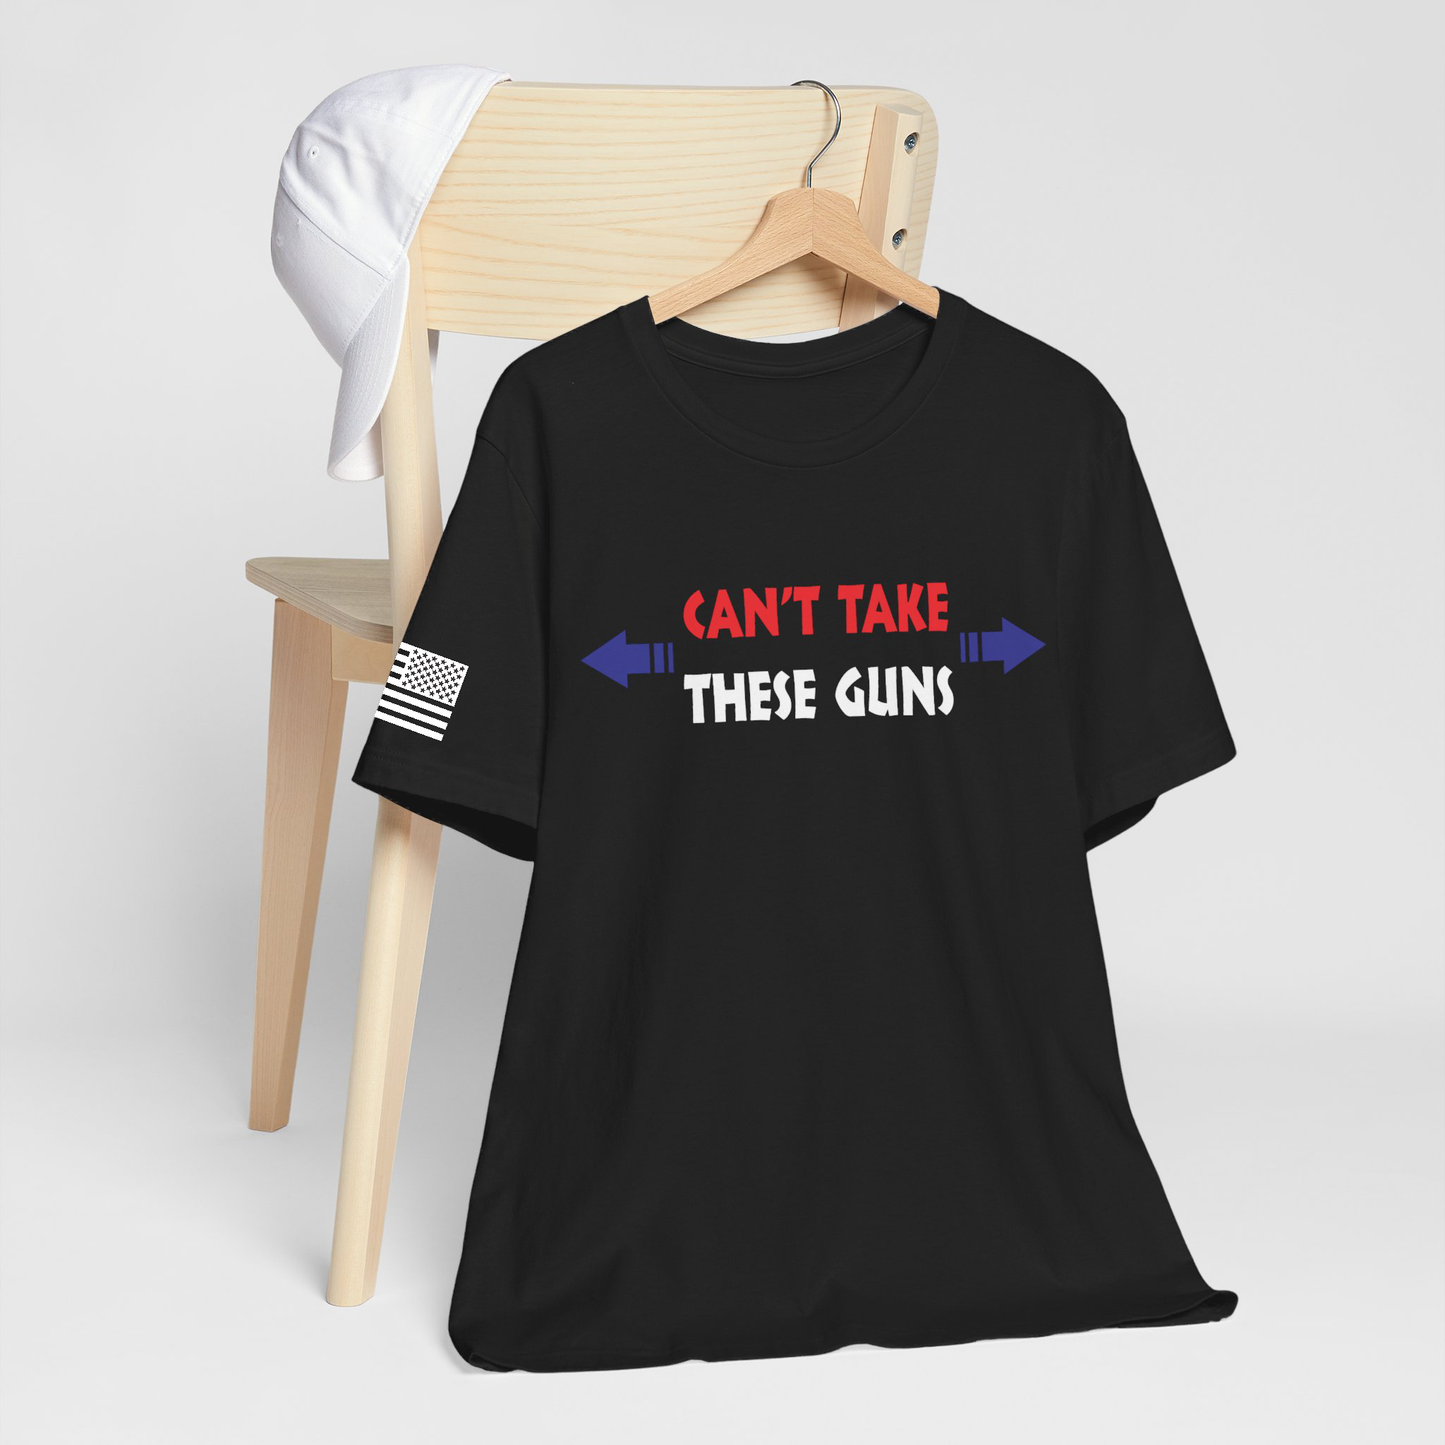 Can't Take These Guns - Black T-shirt